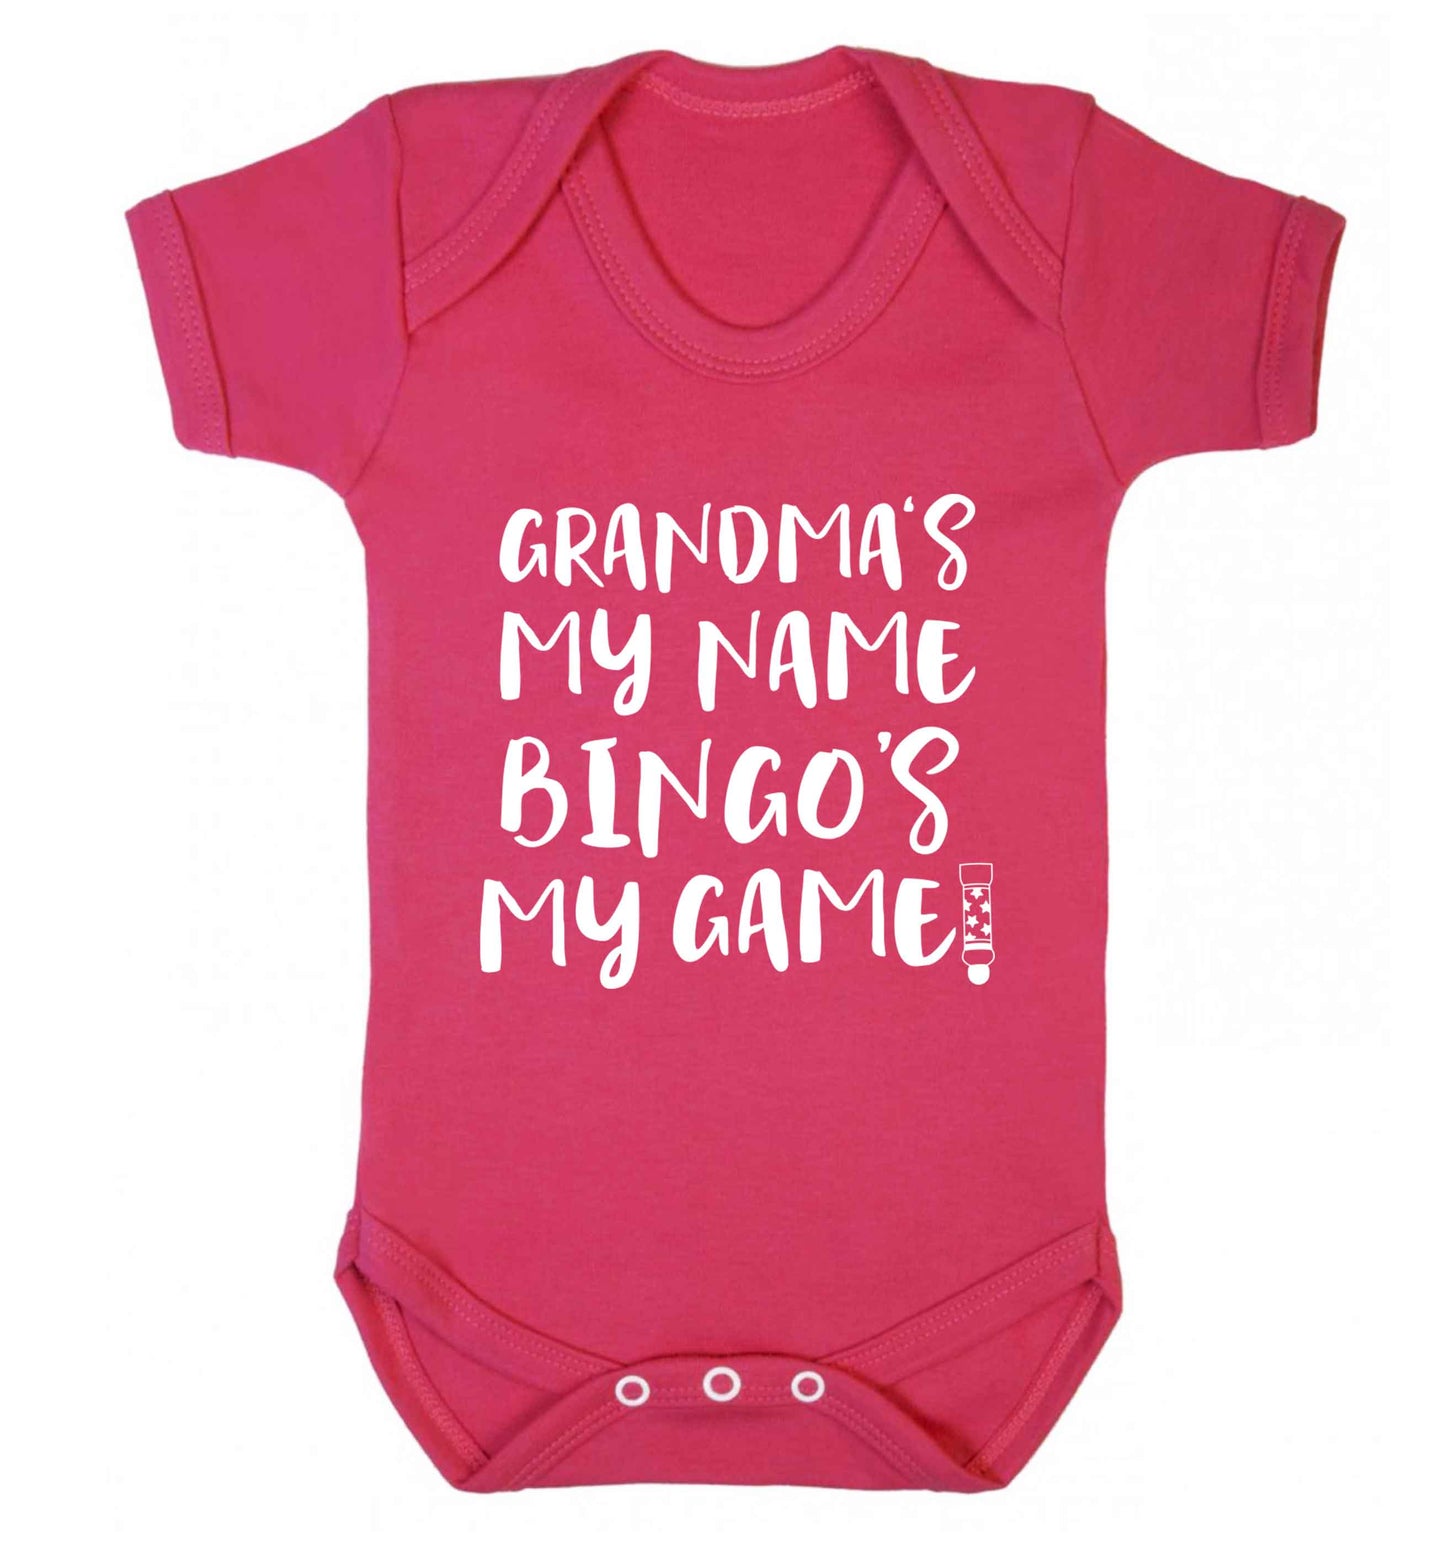 Grandma's my name bingo's my game! Baby Vest dark pink 18-24 months